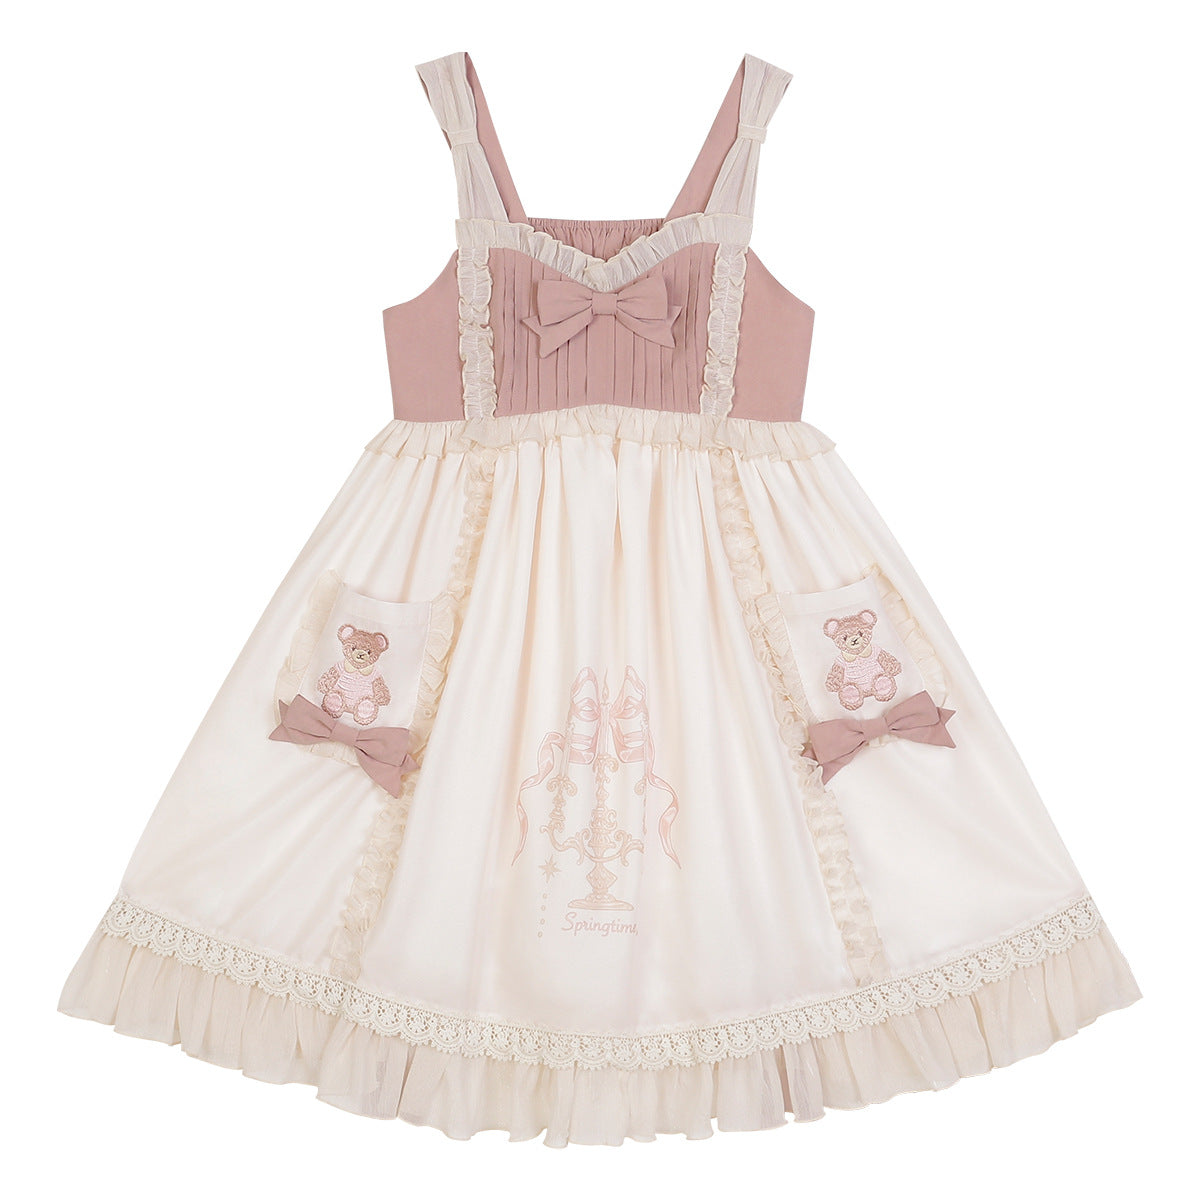 Your Princess~Night Bear Kawaii Lolita Jumper Dress S JSK dress 